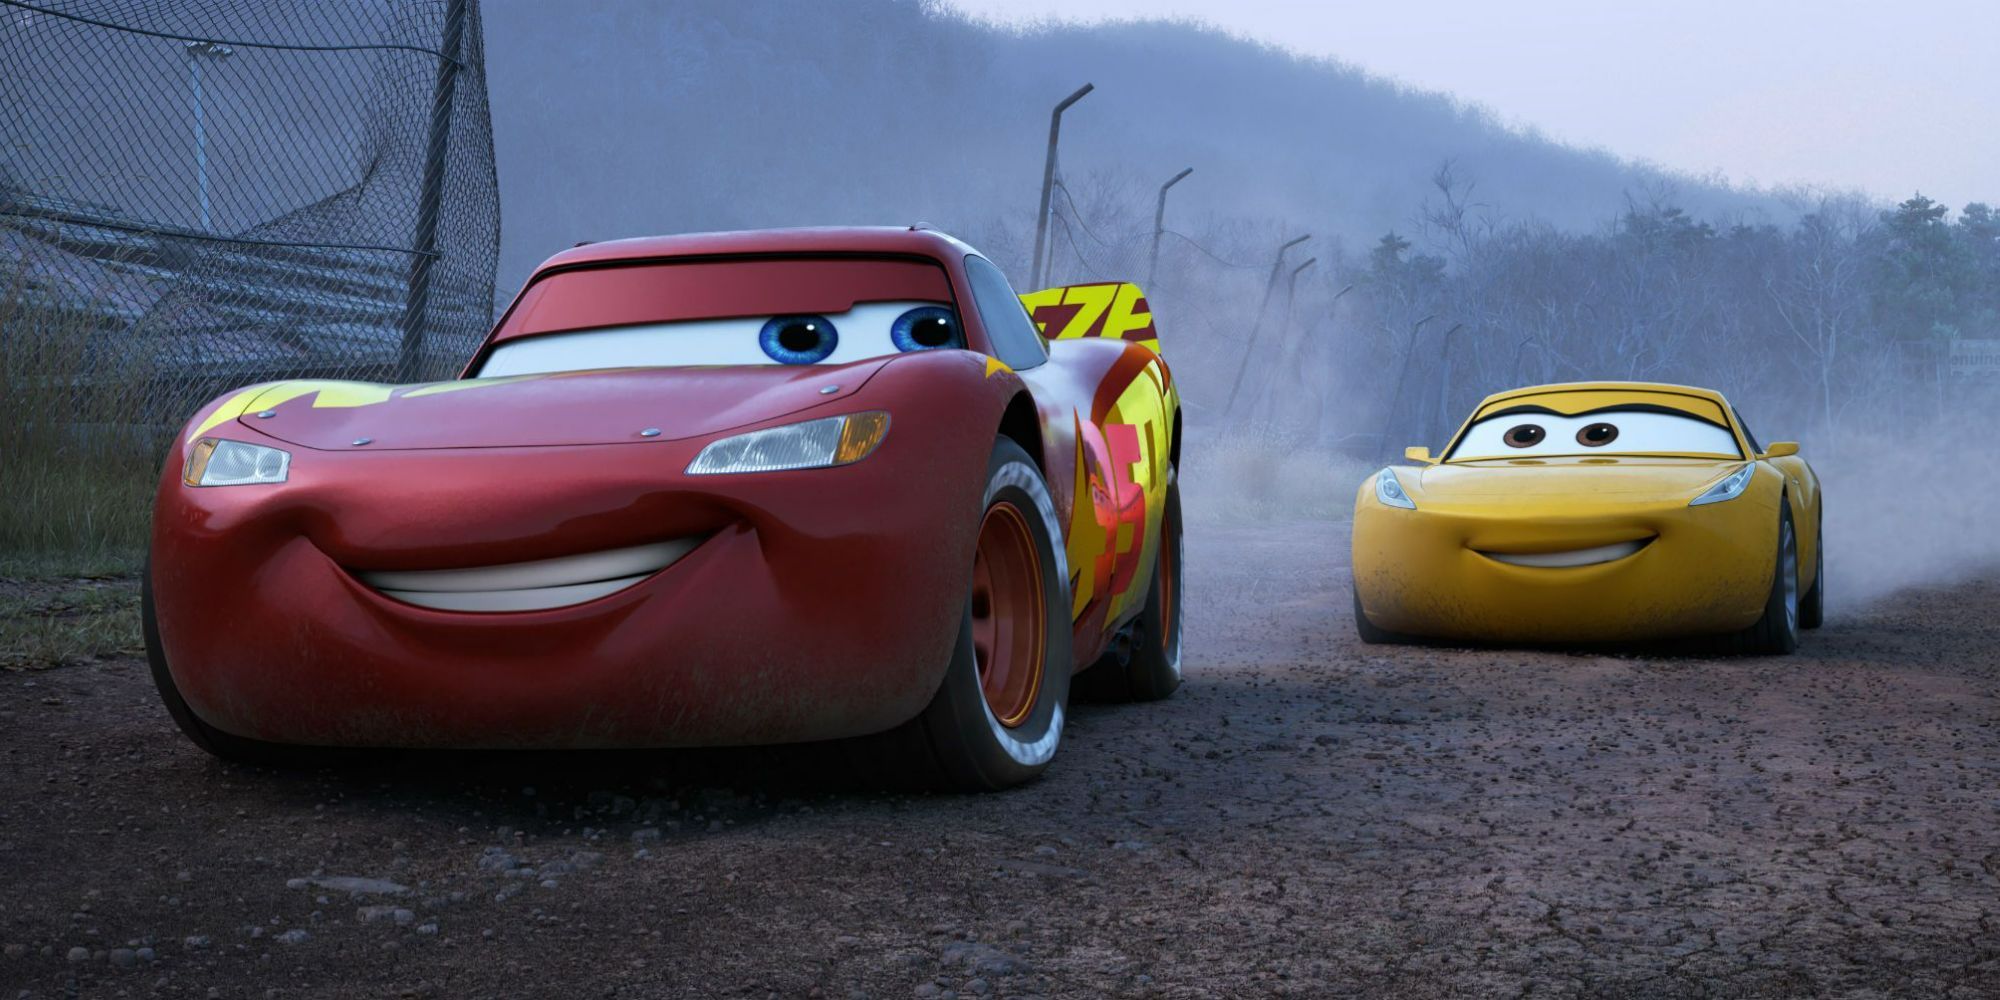 Lightning McQueen and Cruz Ramirez in Cars 3.